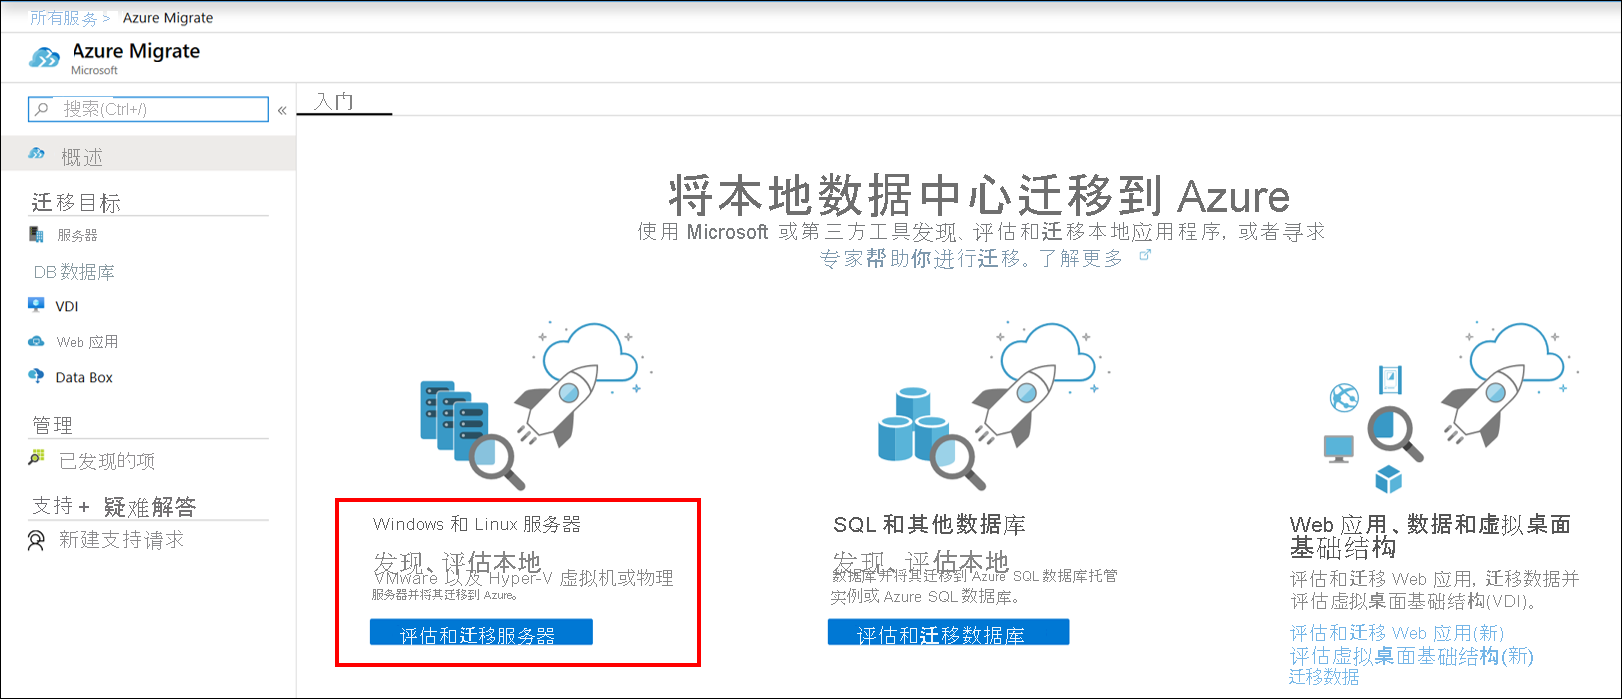 Azure Migrate 项目中“概述”下的“入门”页的屏幕截图。屏幕截图显示了 Azure Migrate 中的可用发现、评估和迁移选项。有一些选项适用于服务器、数据库、Web 应用和本地数据。Windows 和 Linux 服务器选项突出显示为红色边框，并显示带有标签“评估和迁移服务器”的蓝色按钮。